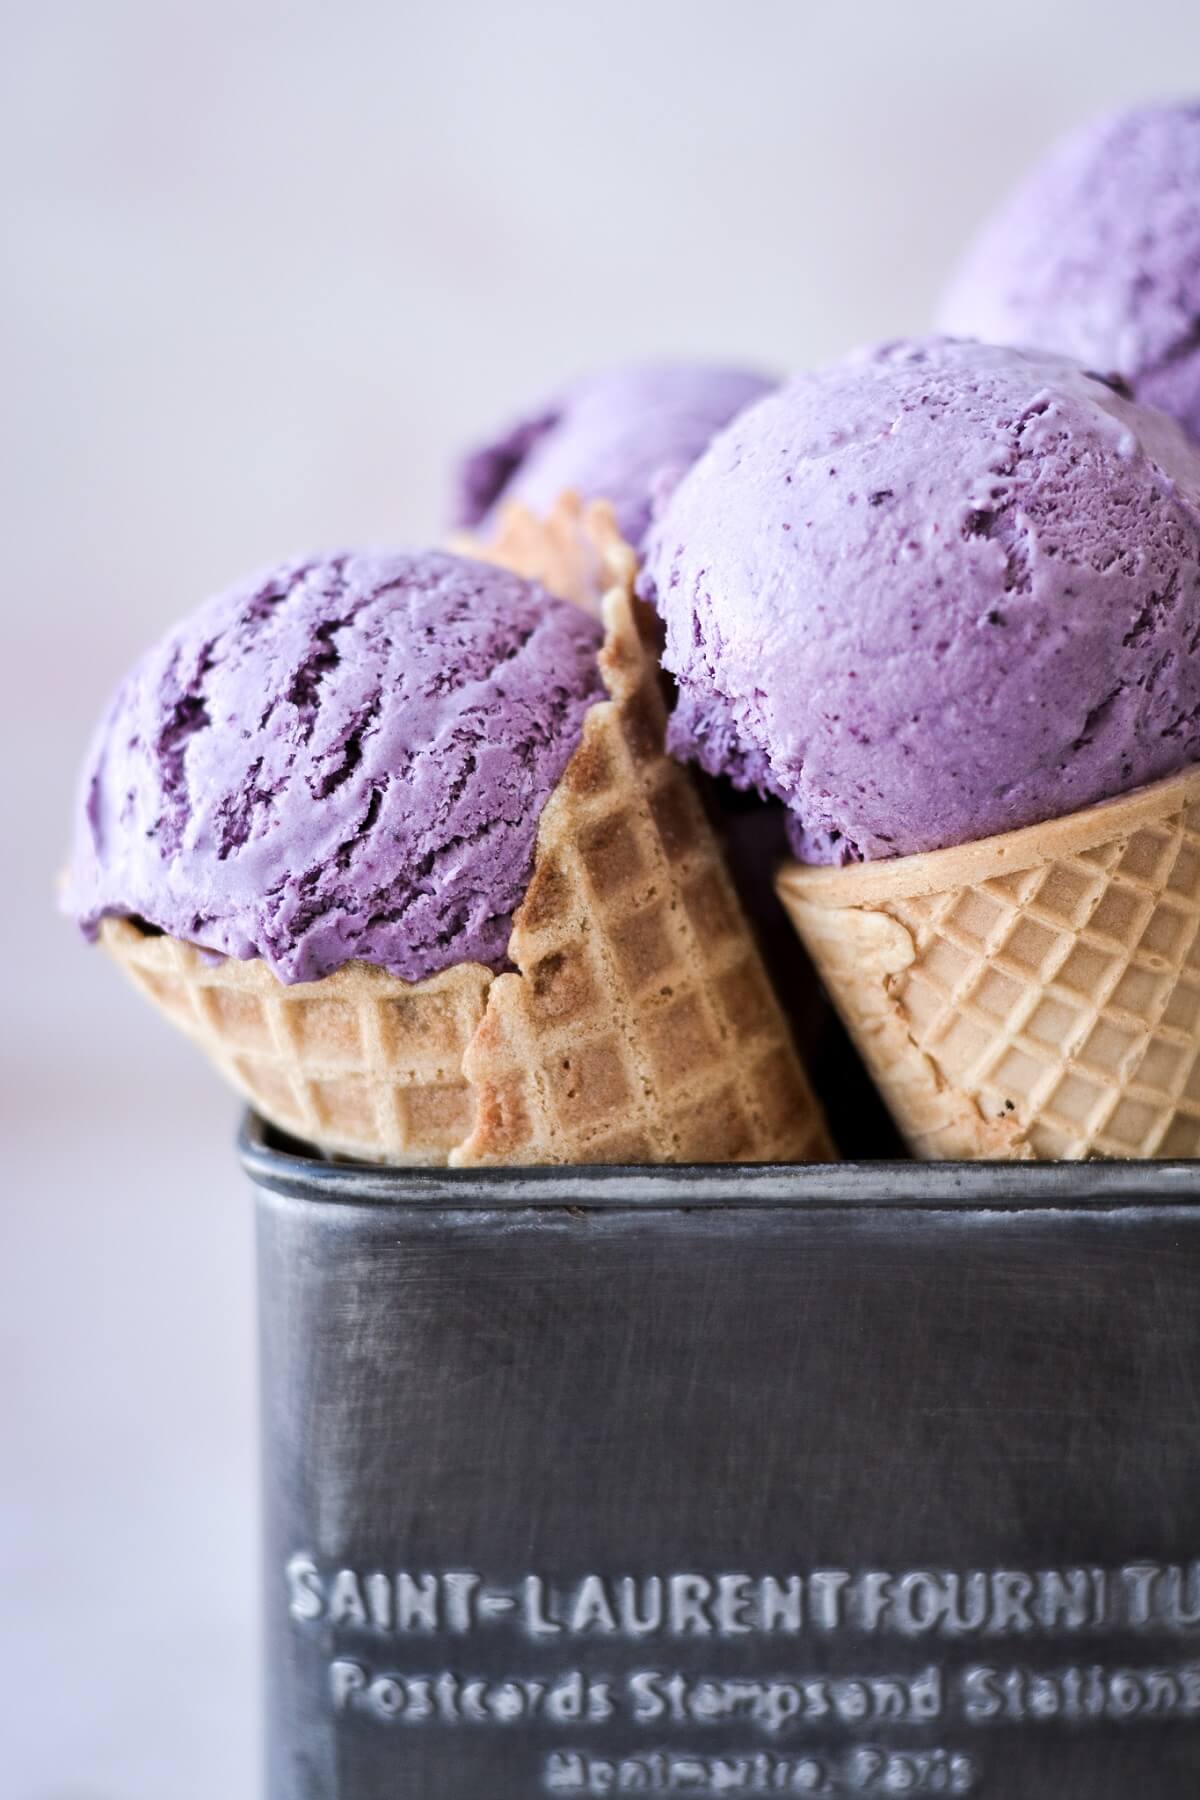 Ice cream cones filled with blueberry ice cream.